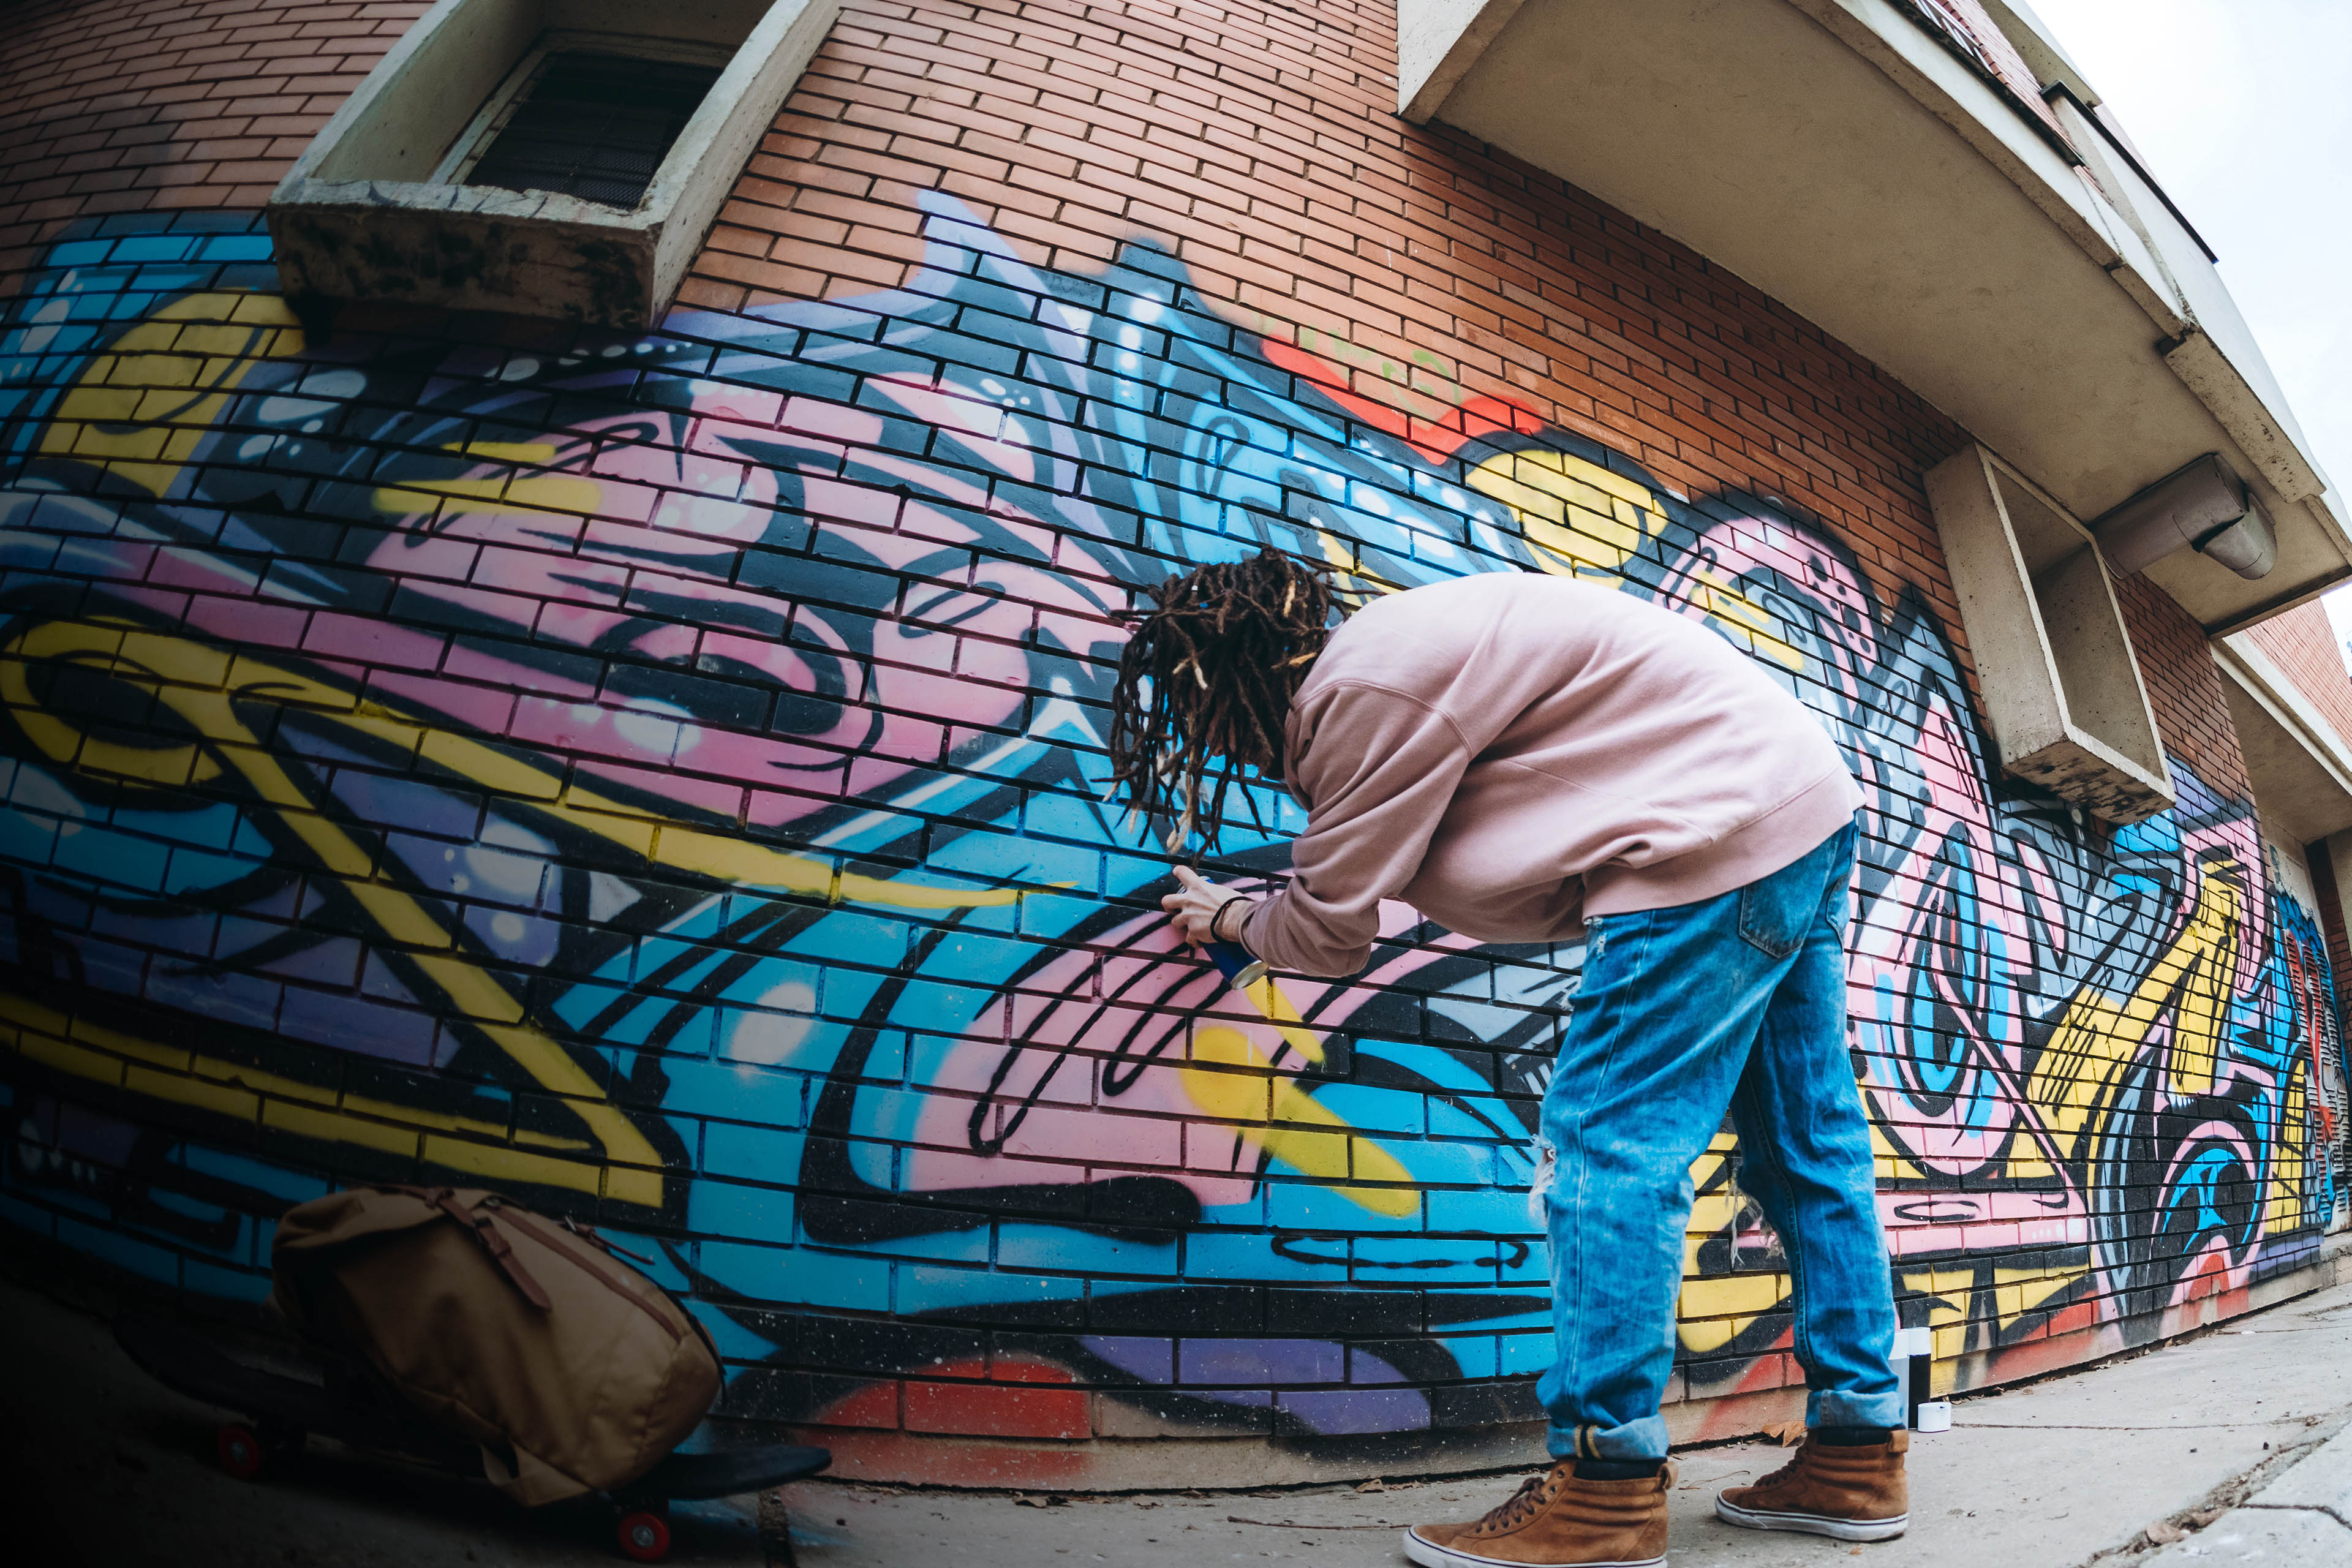 Street artist with dreadlocks